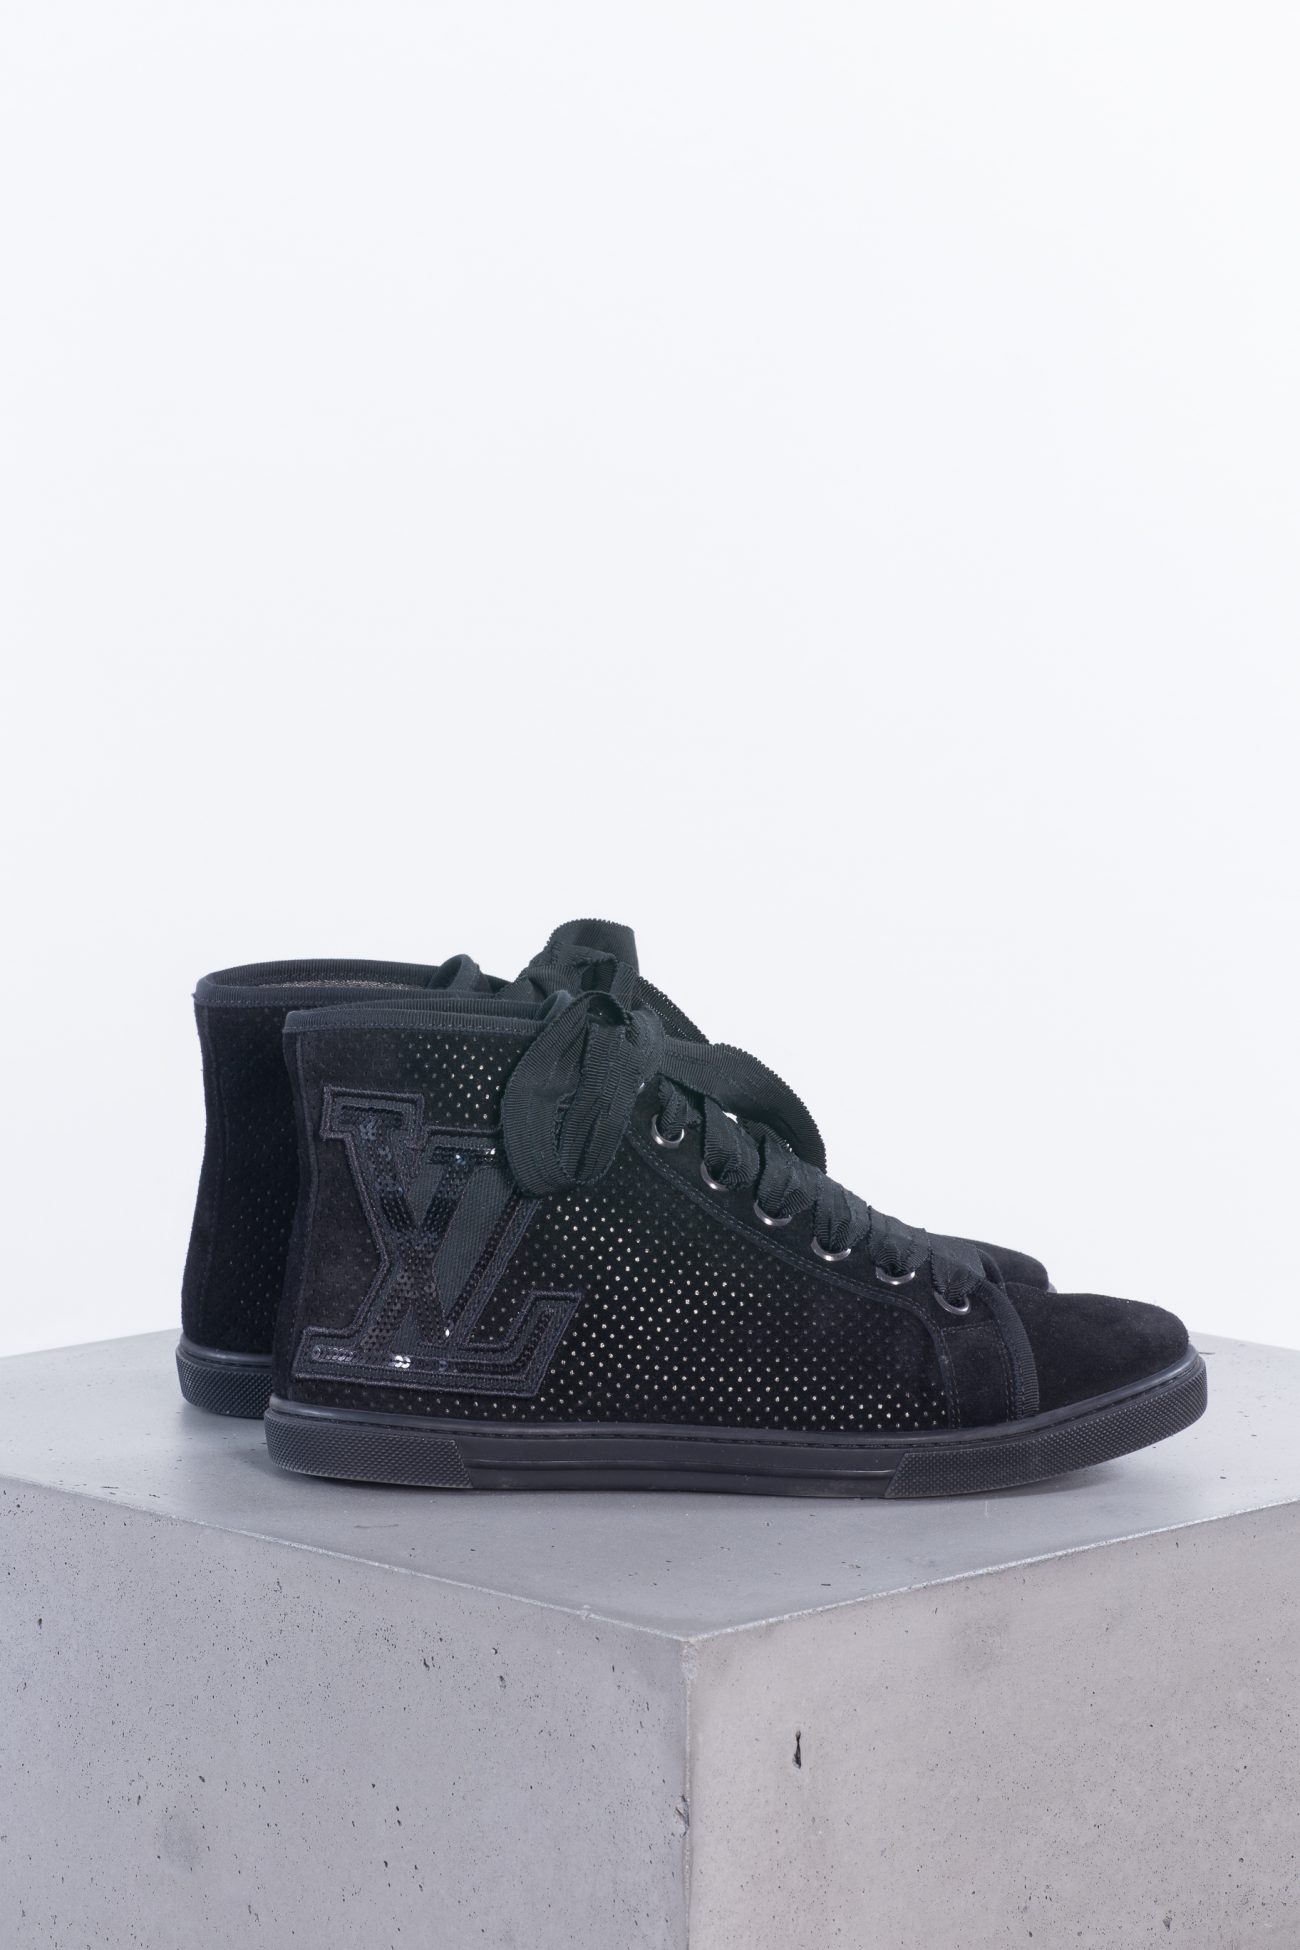 Louis Vuitton Sneakers, 37 - Huntessa Luxury Online Consignment Boutique